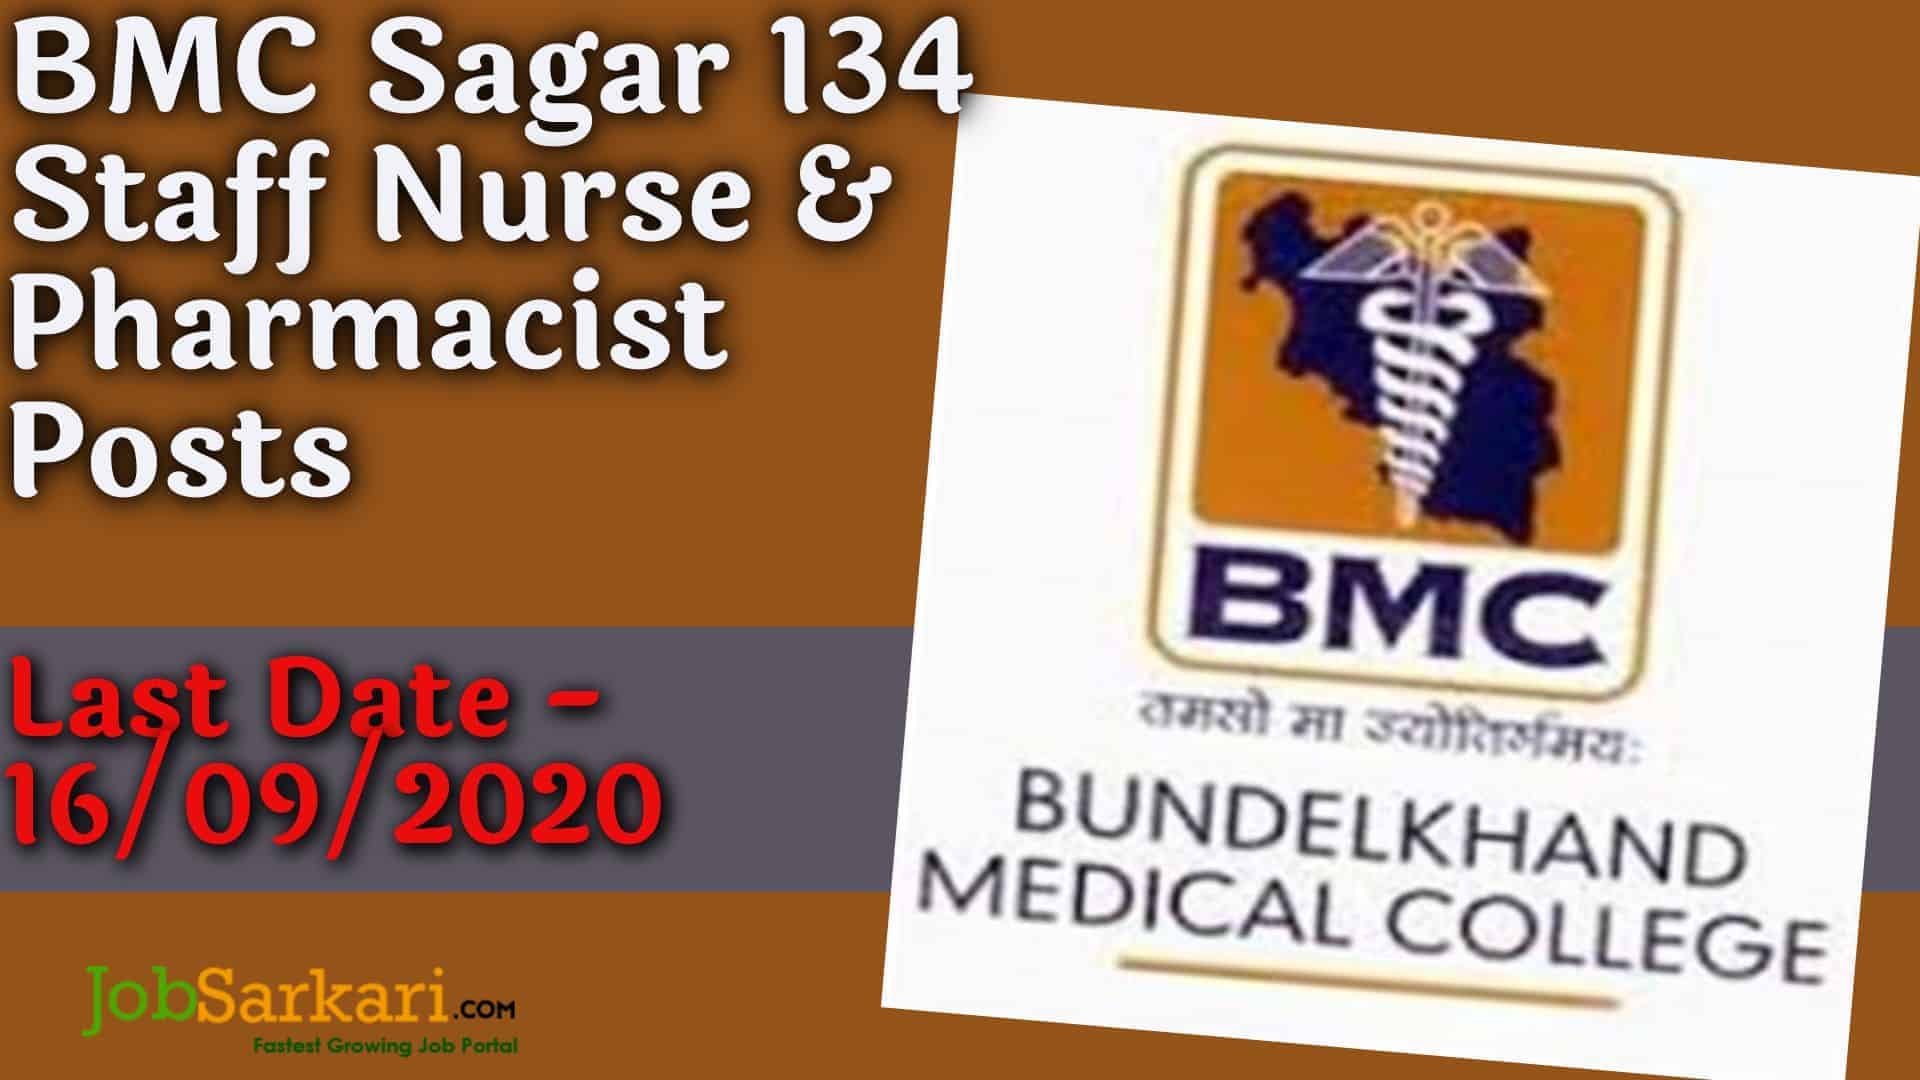 BMC Sagar 134 Staff Nurse & Pharmacist Posts